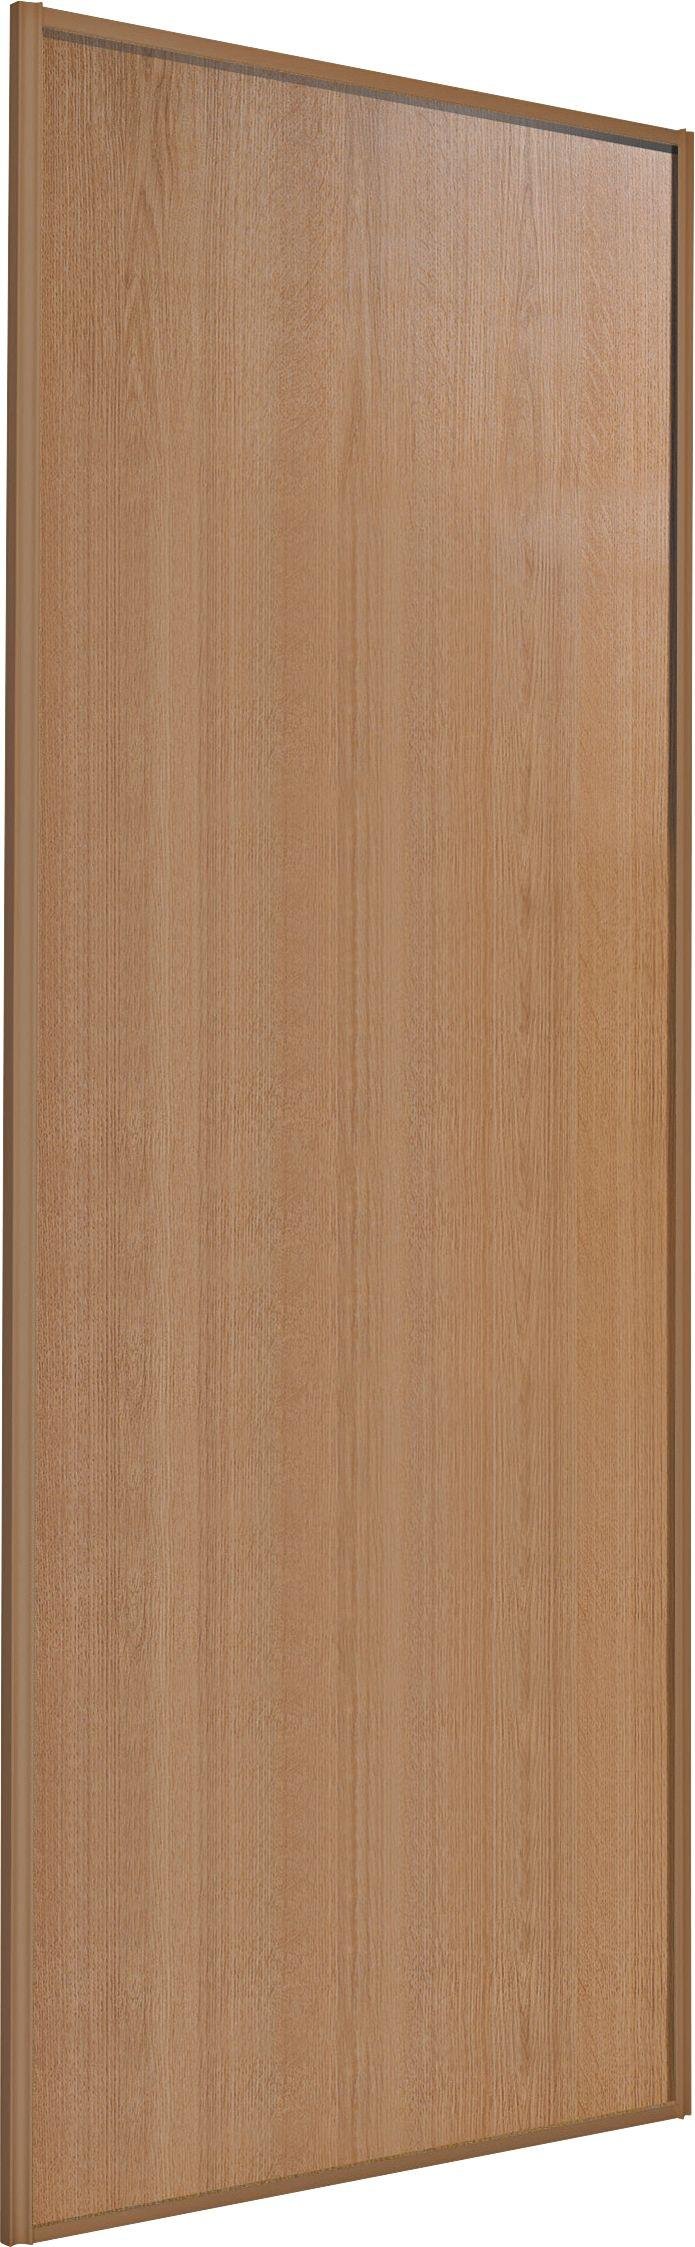 Sliding Wardrobe Door W914mm Oak Panel Review